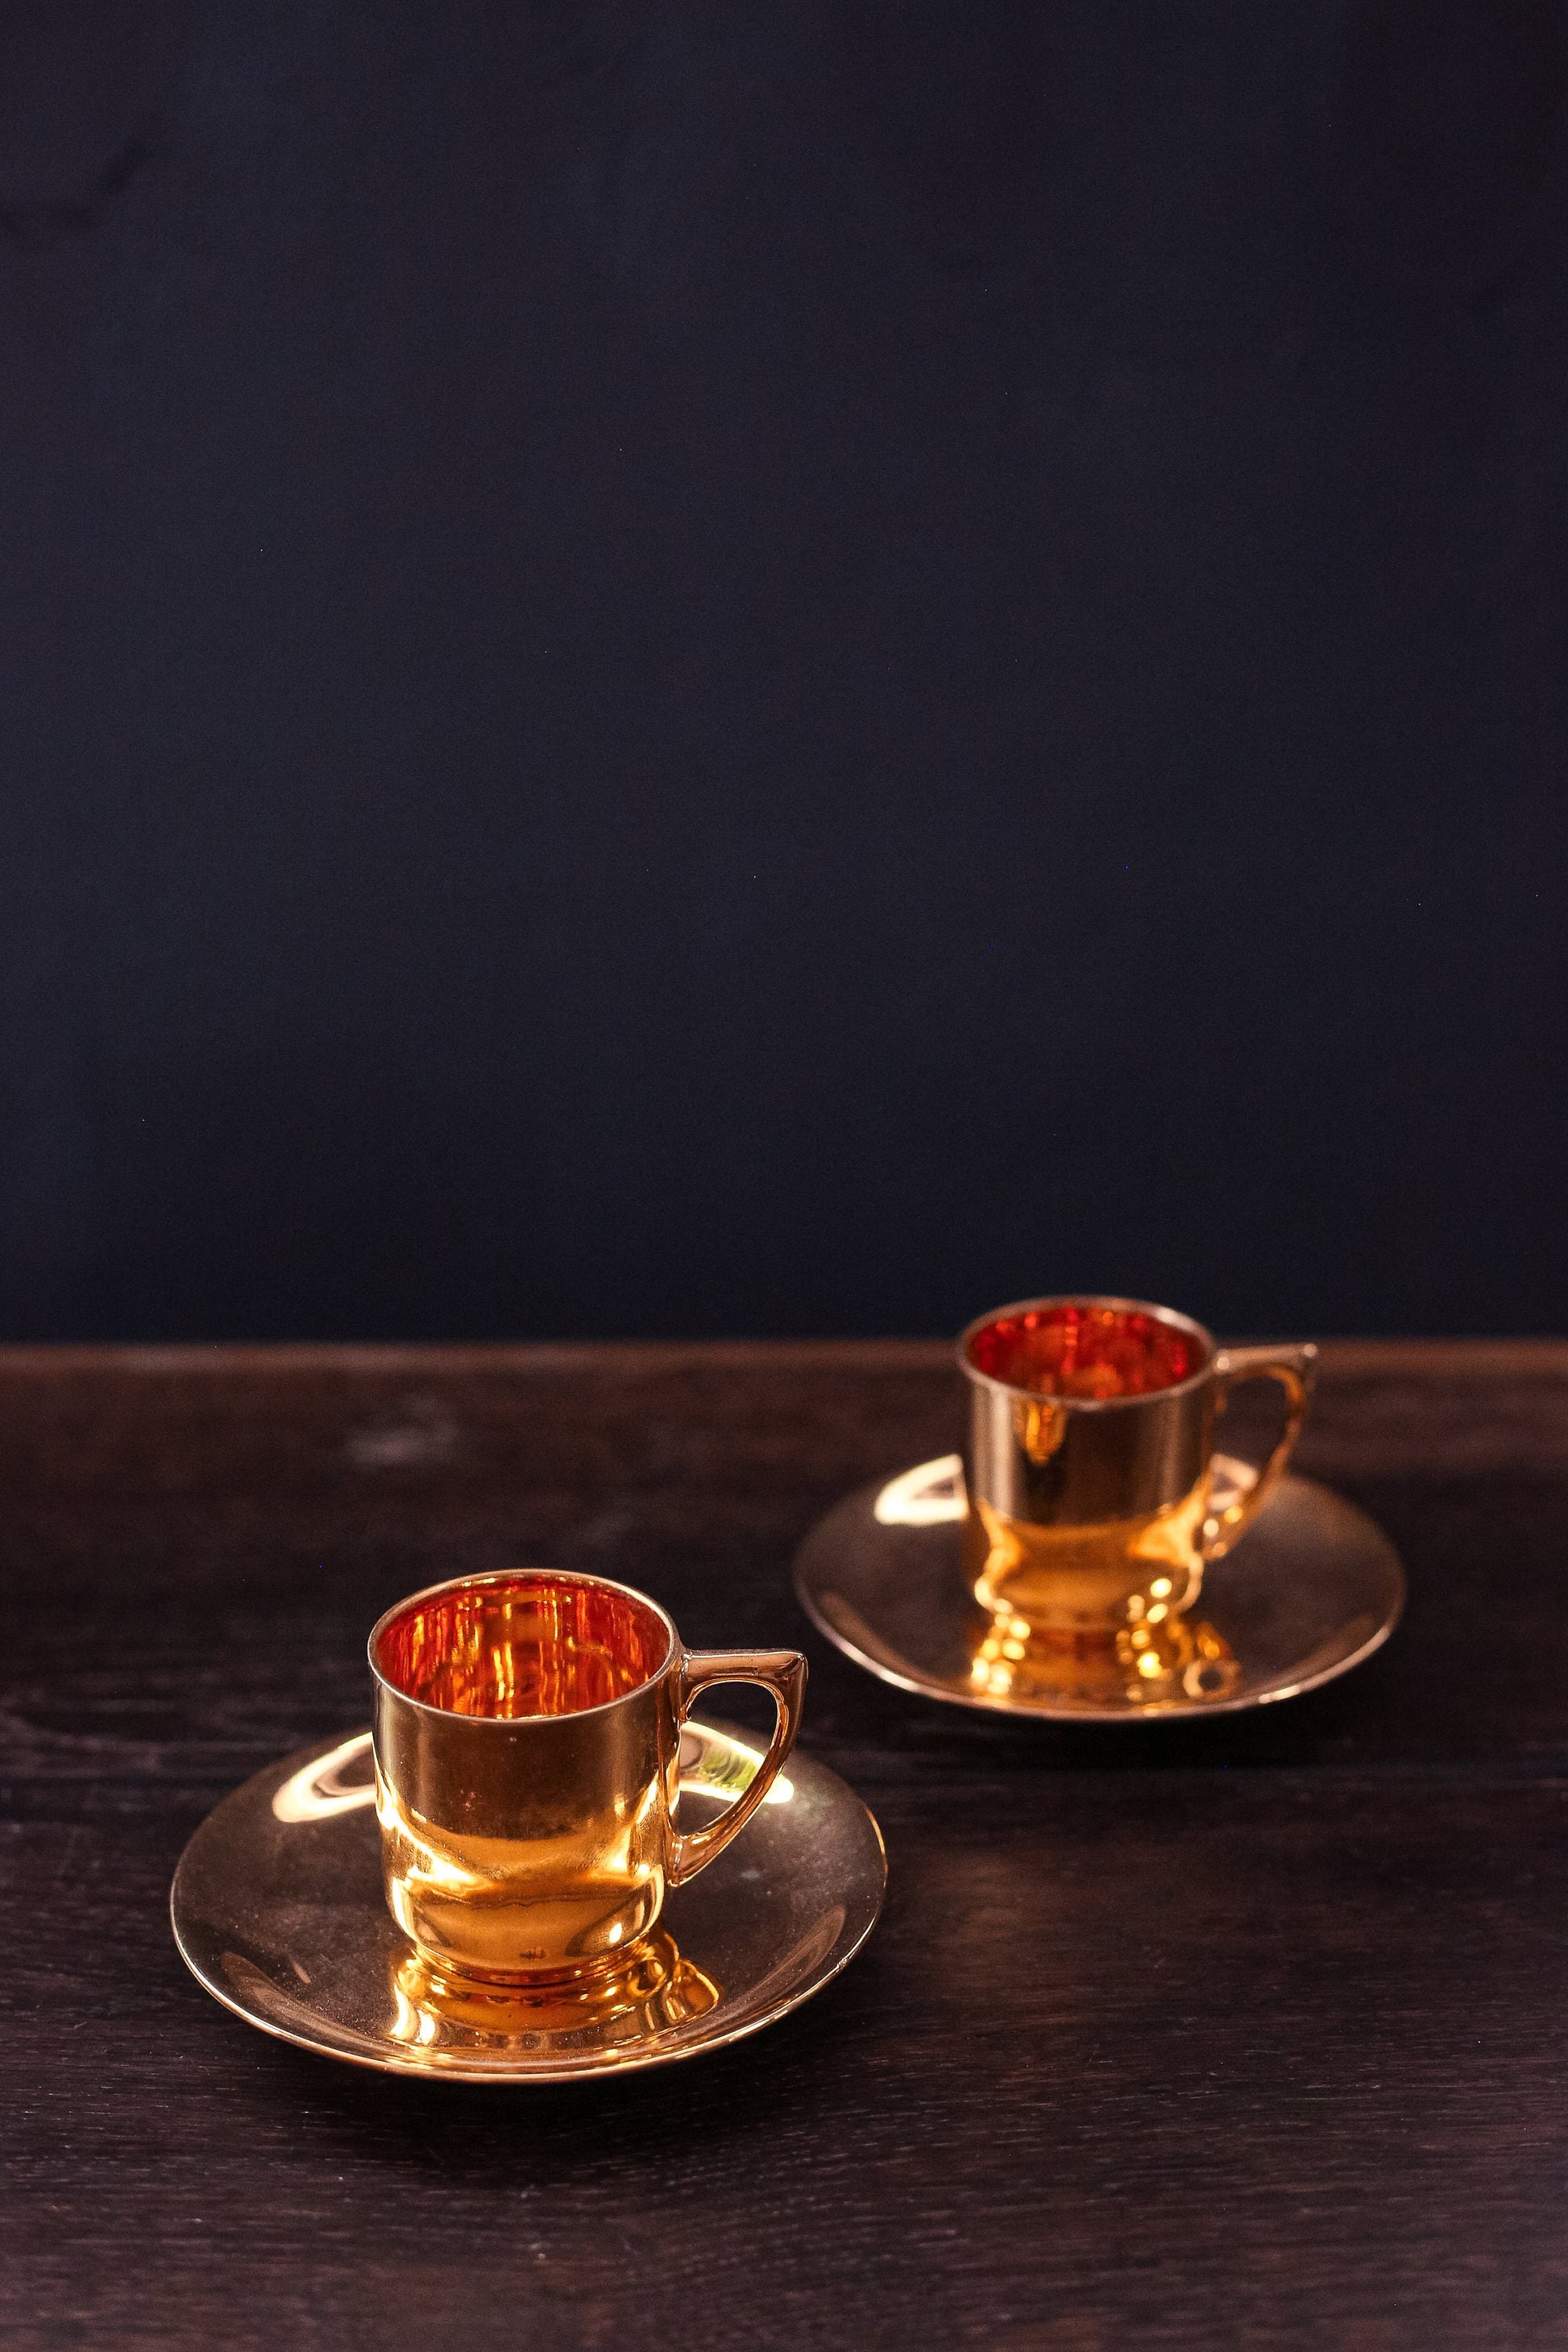 White and Gold Cup Saucer Sets - Vintage Porcelain Tea cup sets